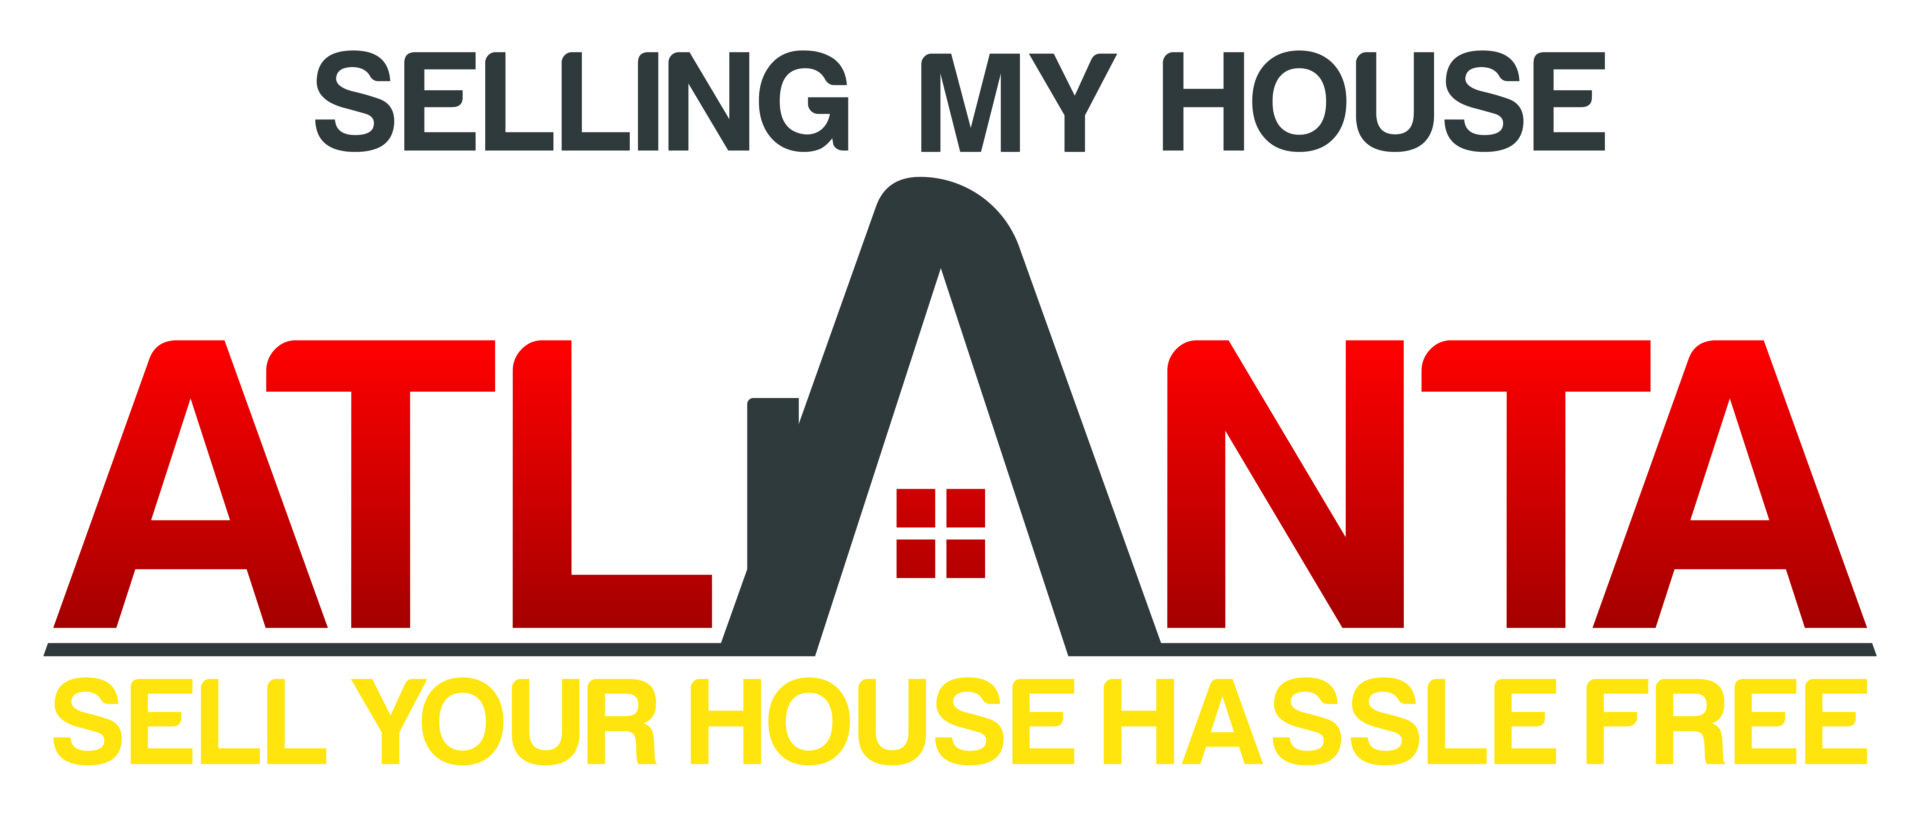 Selling My House Atlanta  logo